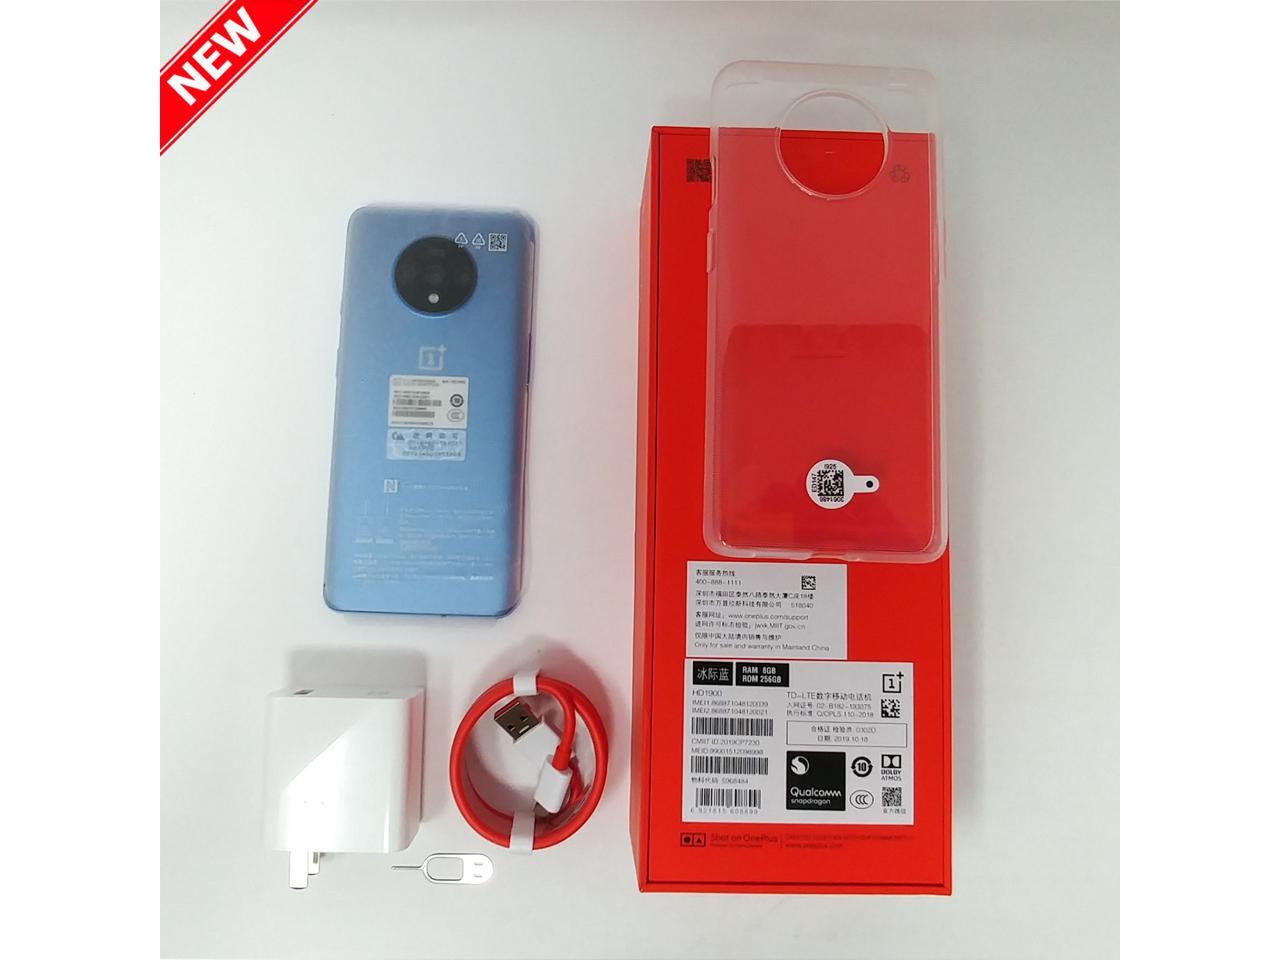 OnePlus 7T 256GB HD1900 GSM Factory Unlocked 4G LTE 6.55" Fluid Display 8GB RAM 48 MP Ultra Wide Triple Camera Smartphone - Glacier Blue - International Version